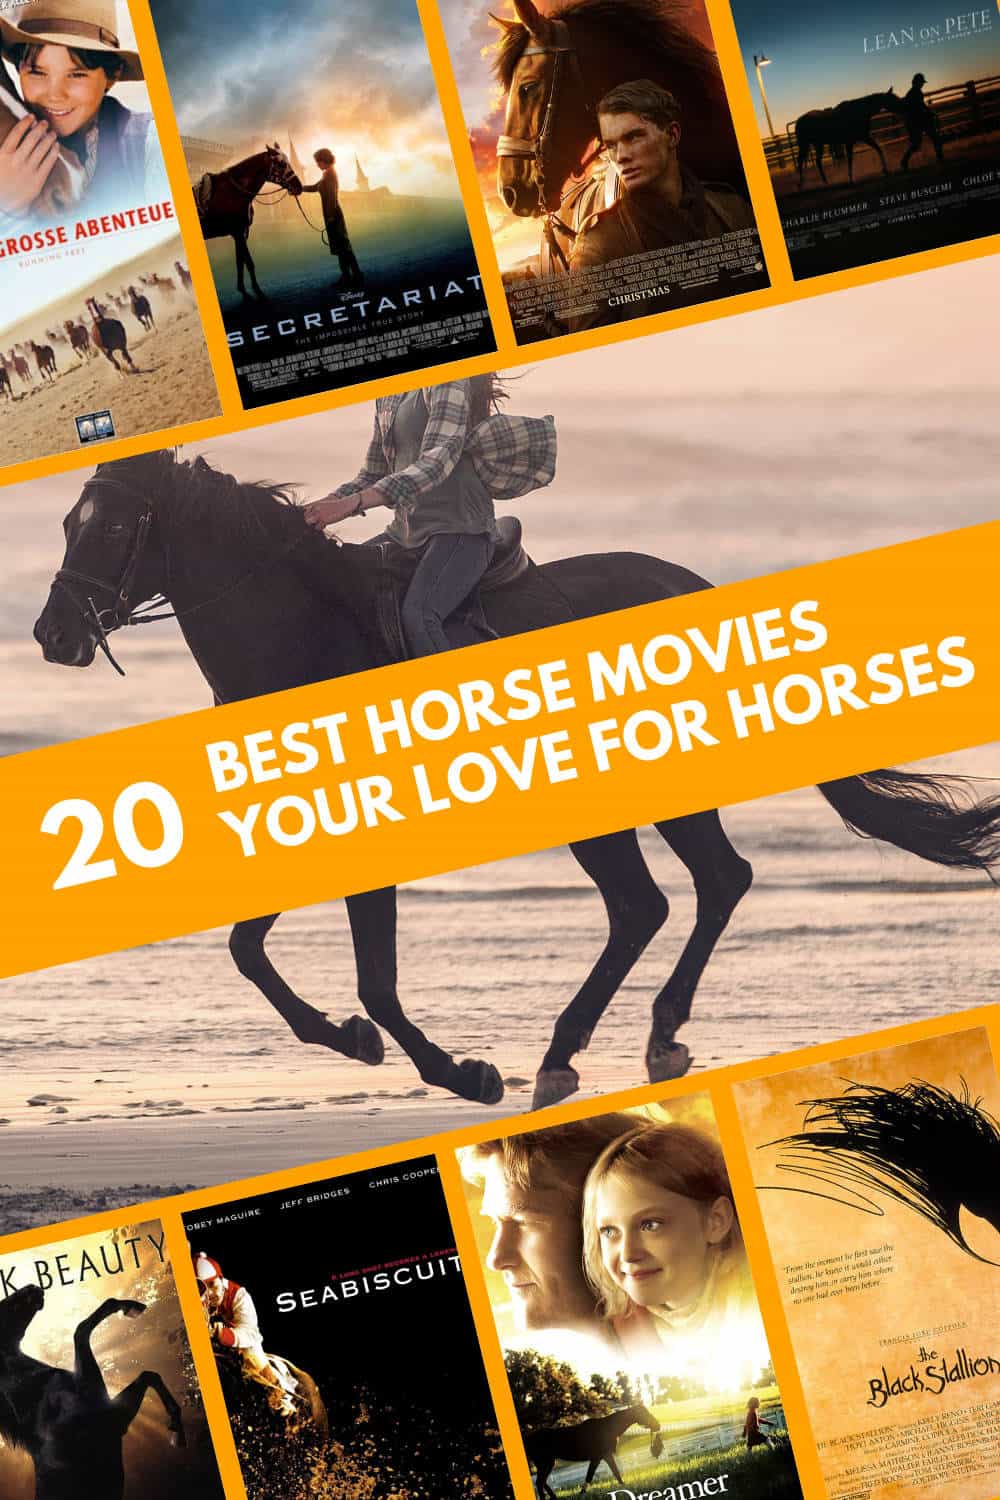 Best Horse Movie That Will Awaken Your Love For Horses